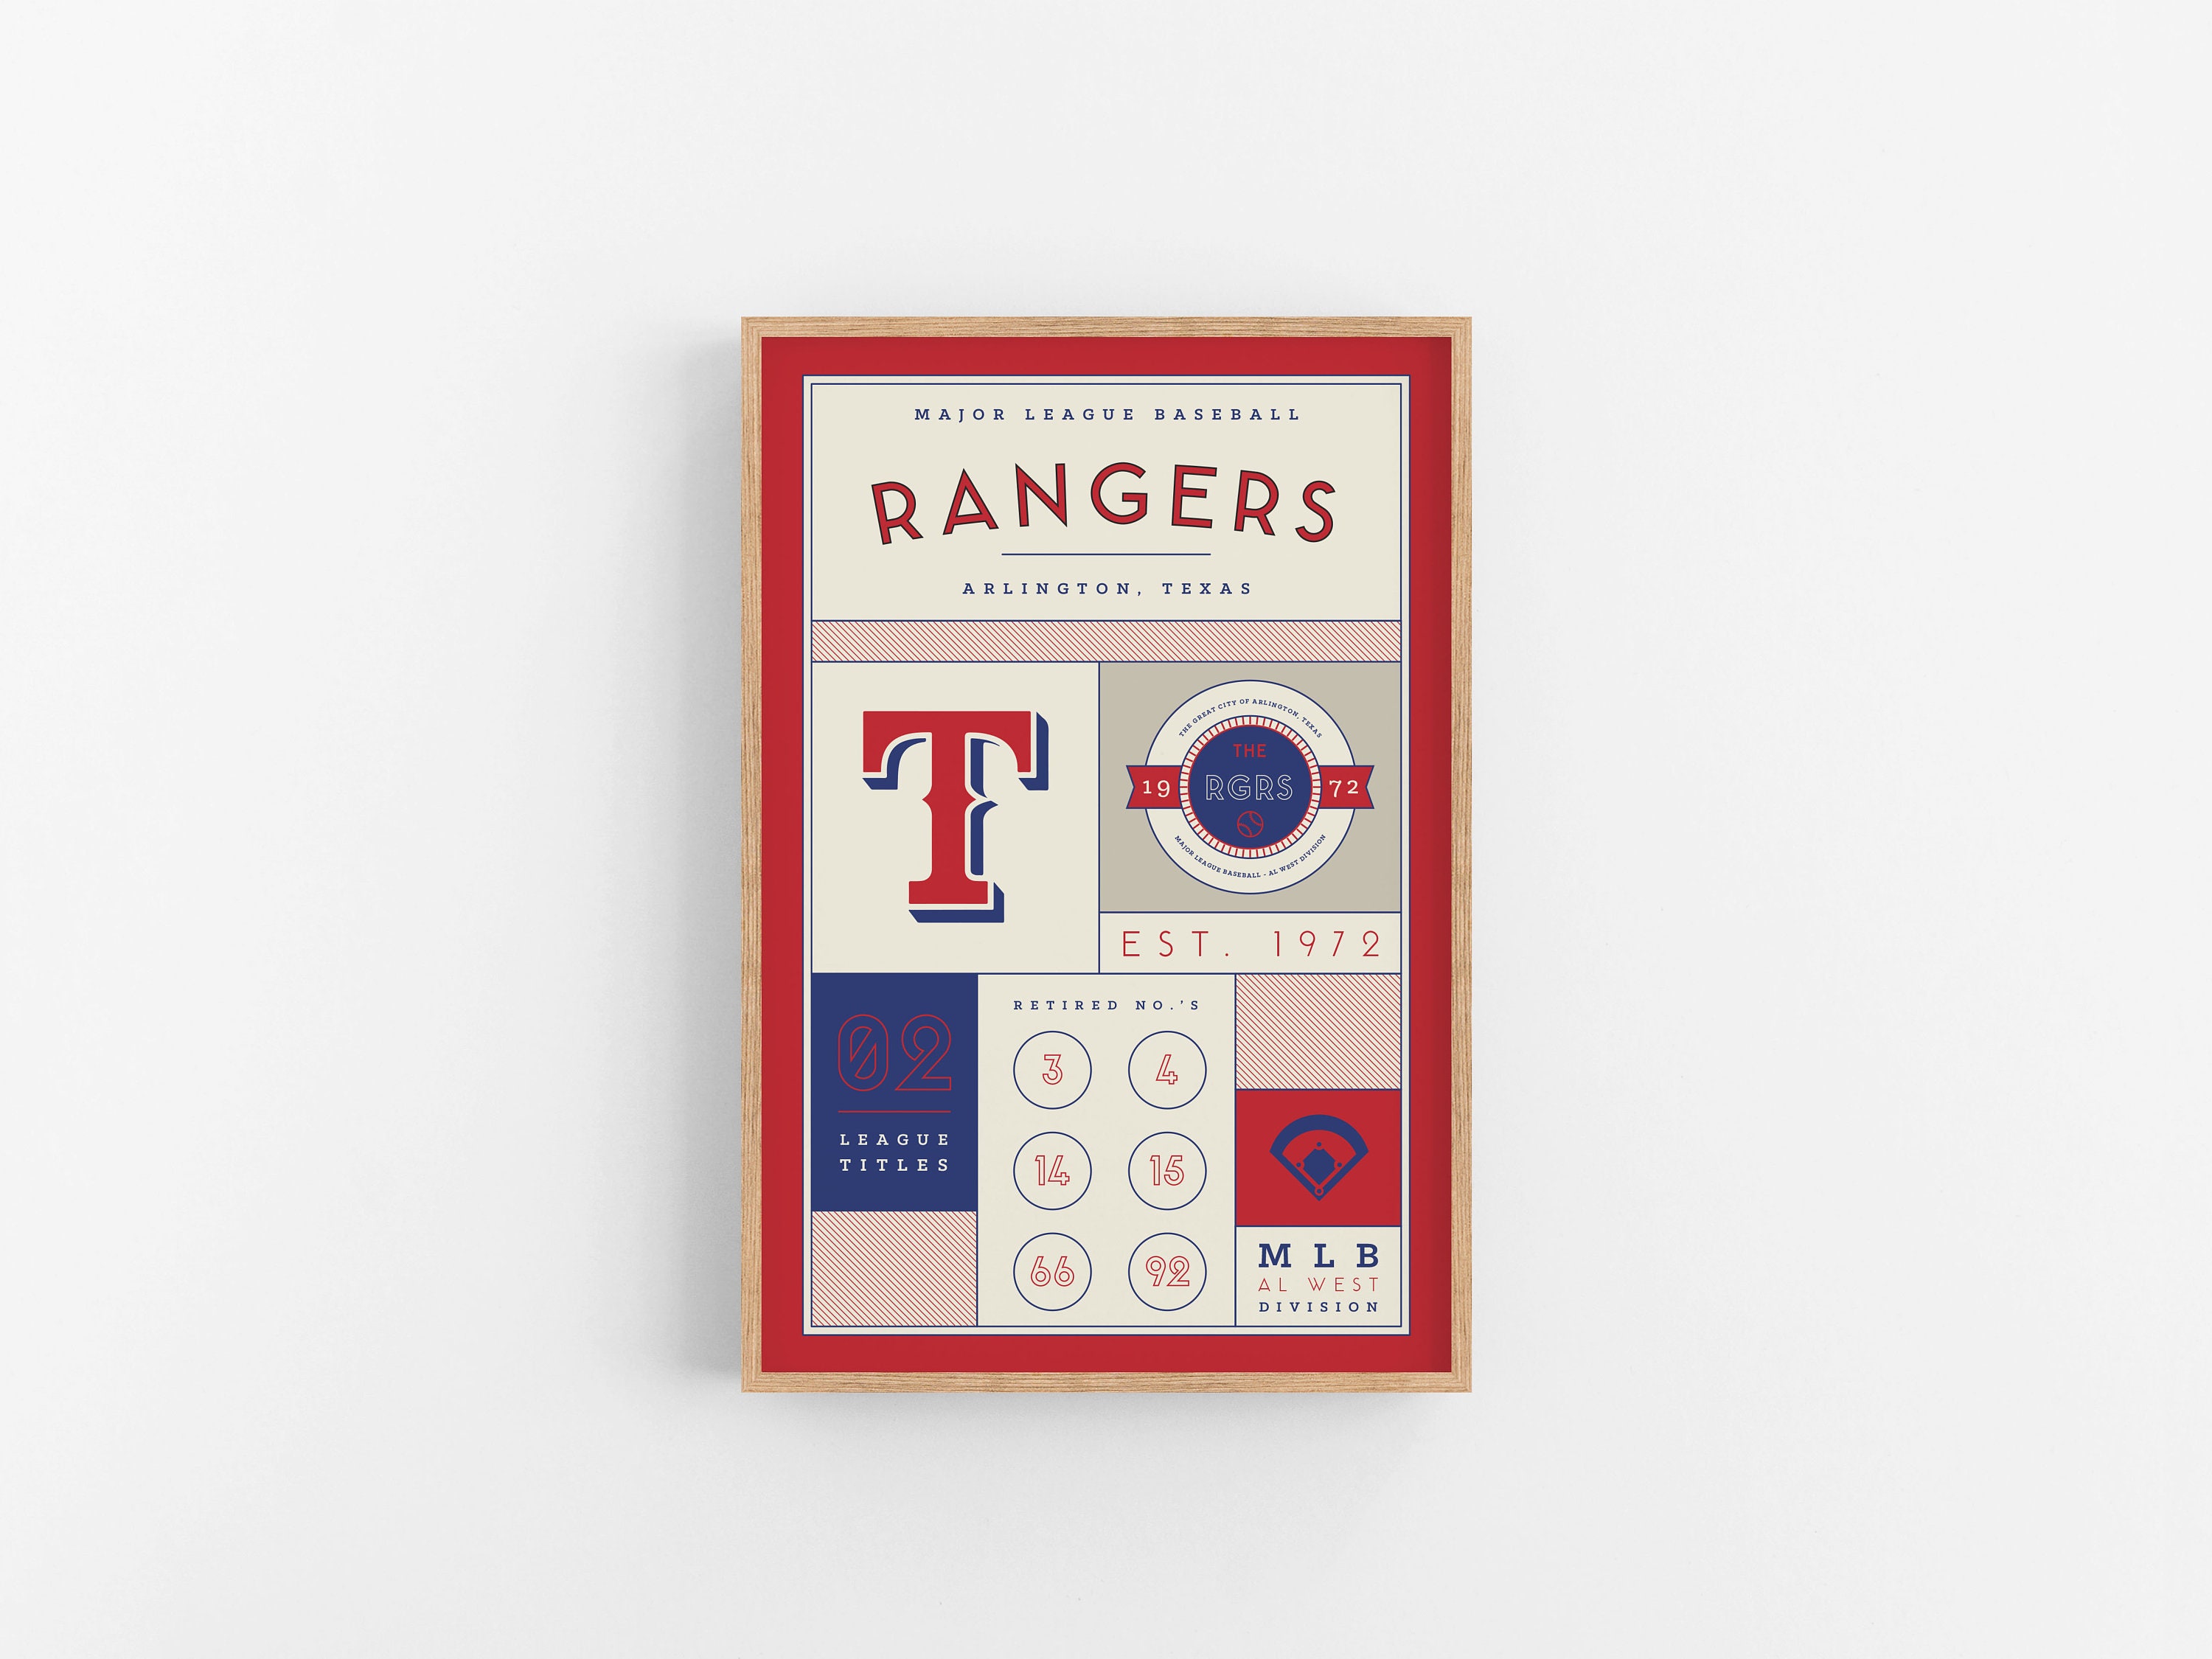 Retro Texas Rangers Baseball Shirt - Ink In Action